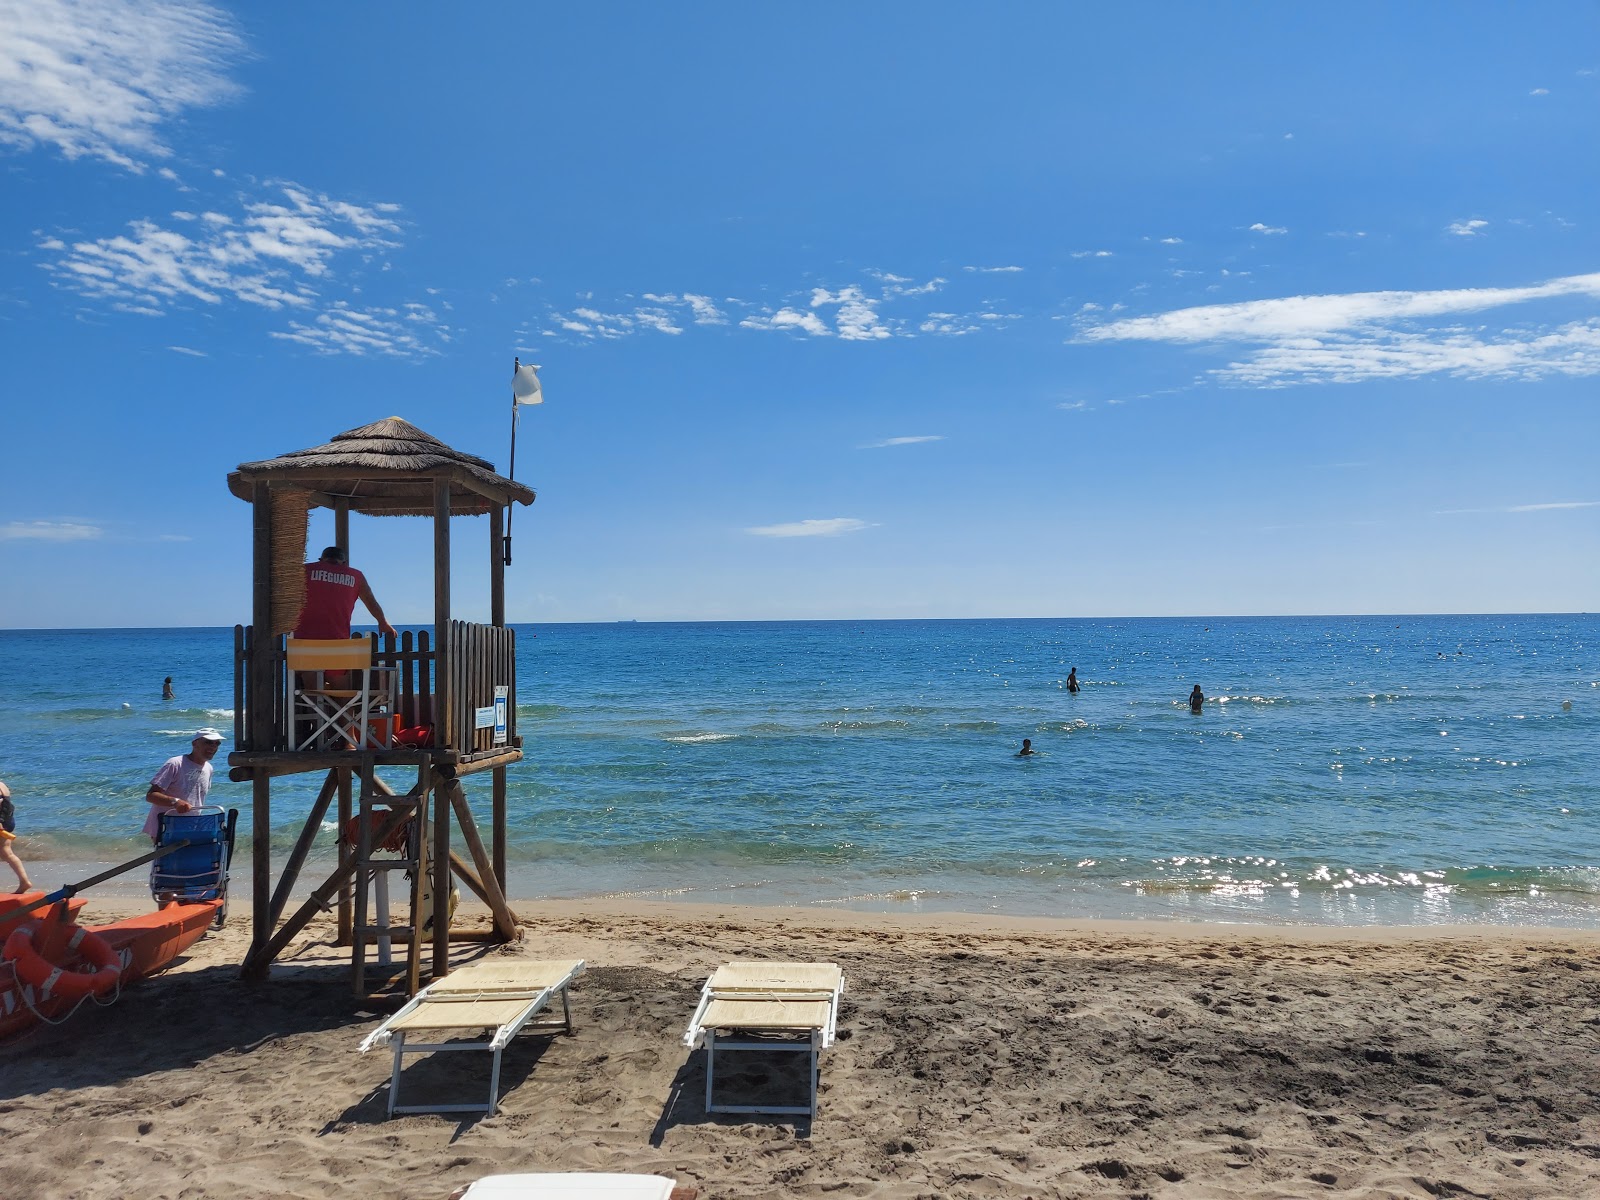 Foto de Spiaggia Laghi Alimini - lugar popular entre los conocedores del relax